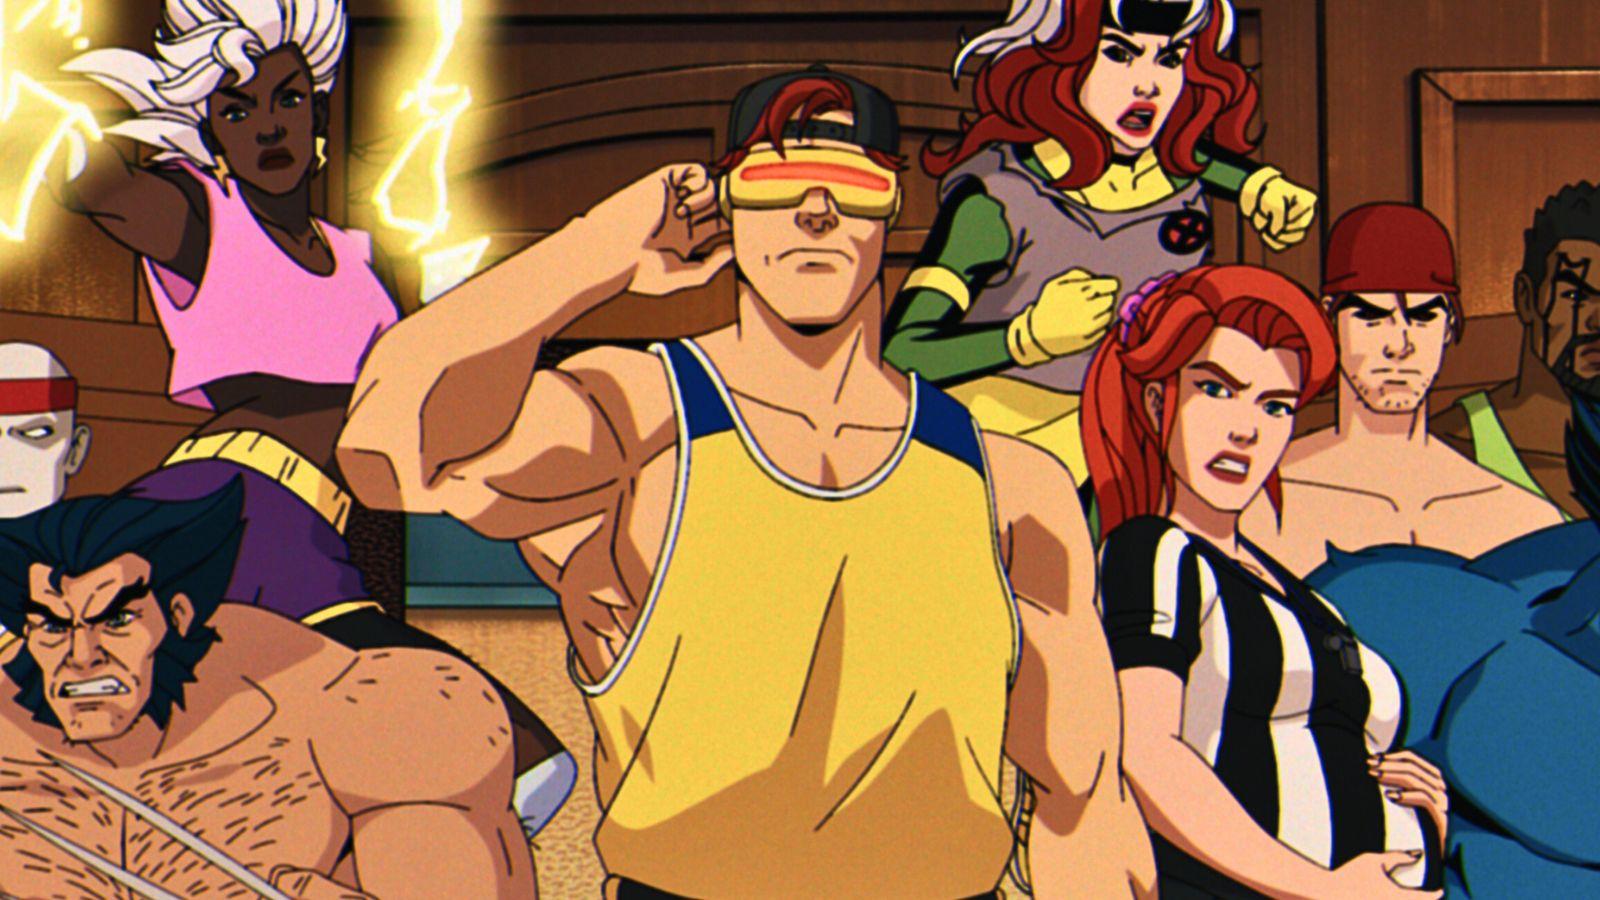 Cyclops, Storm, Wolverine, Rogue, Beast, and Jubilee in X-Men 97.